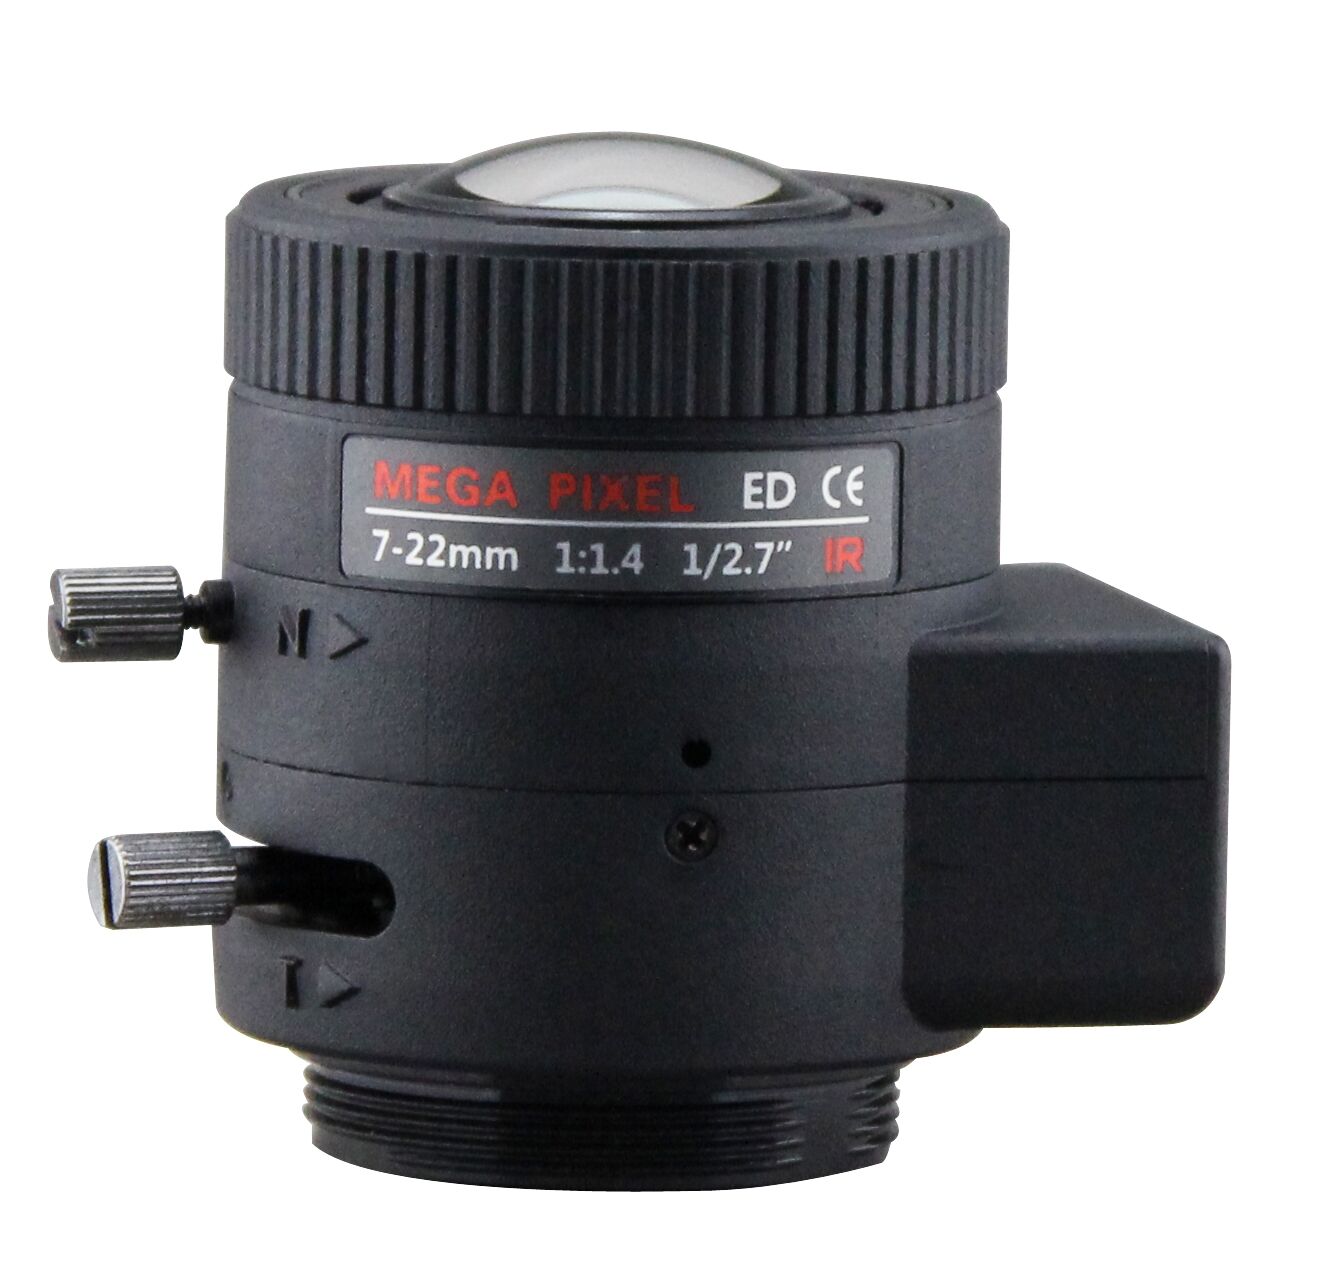 Bosch VLG-0312-MP1 DC Iris Vari Focal CCTV Camera Lens